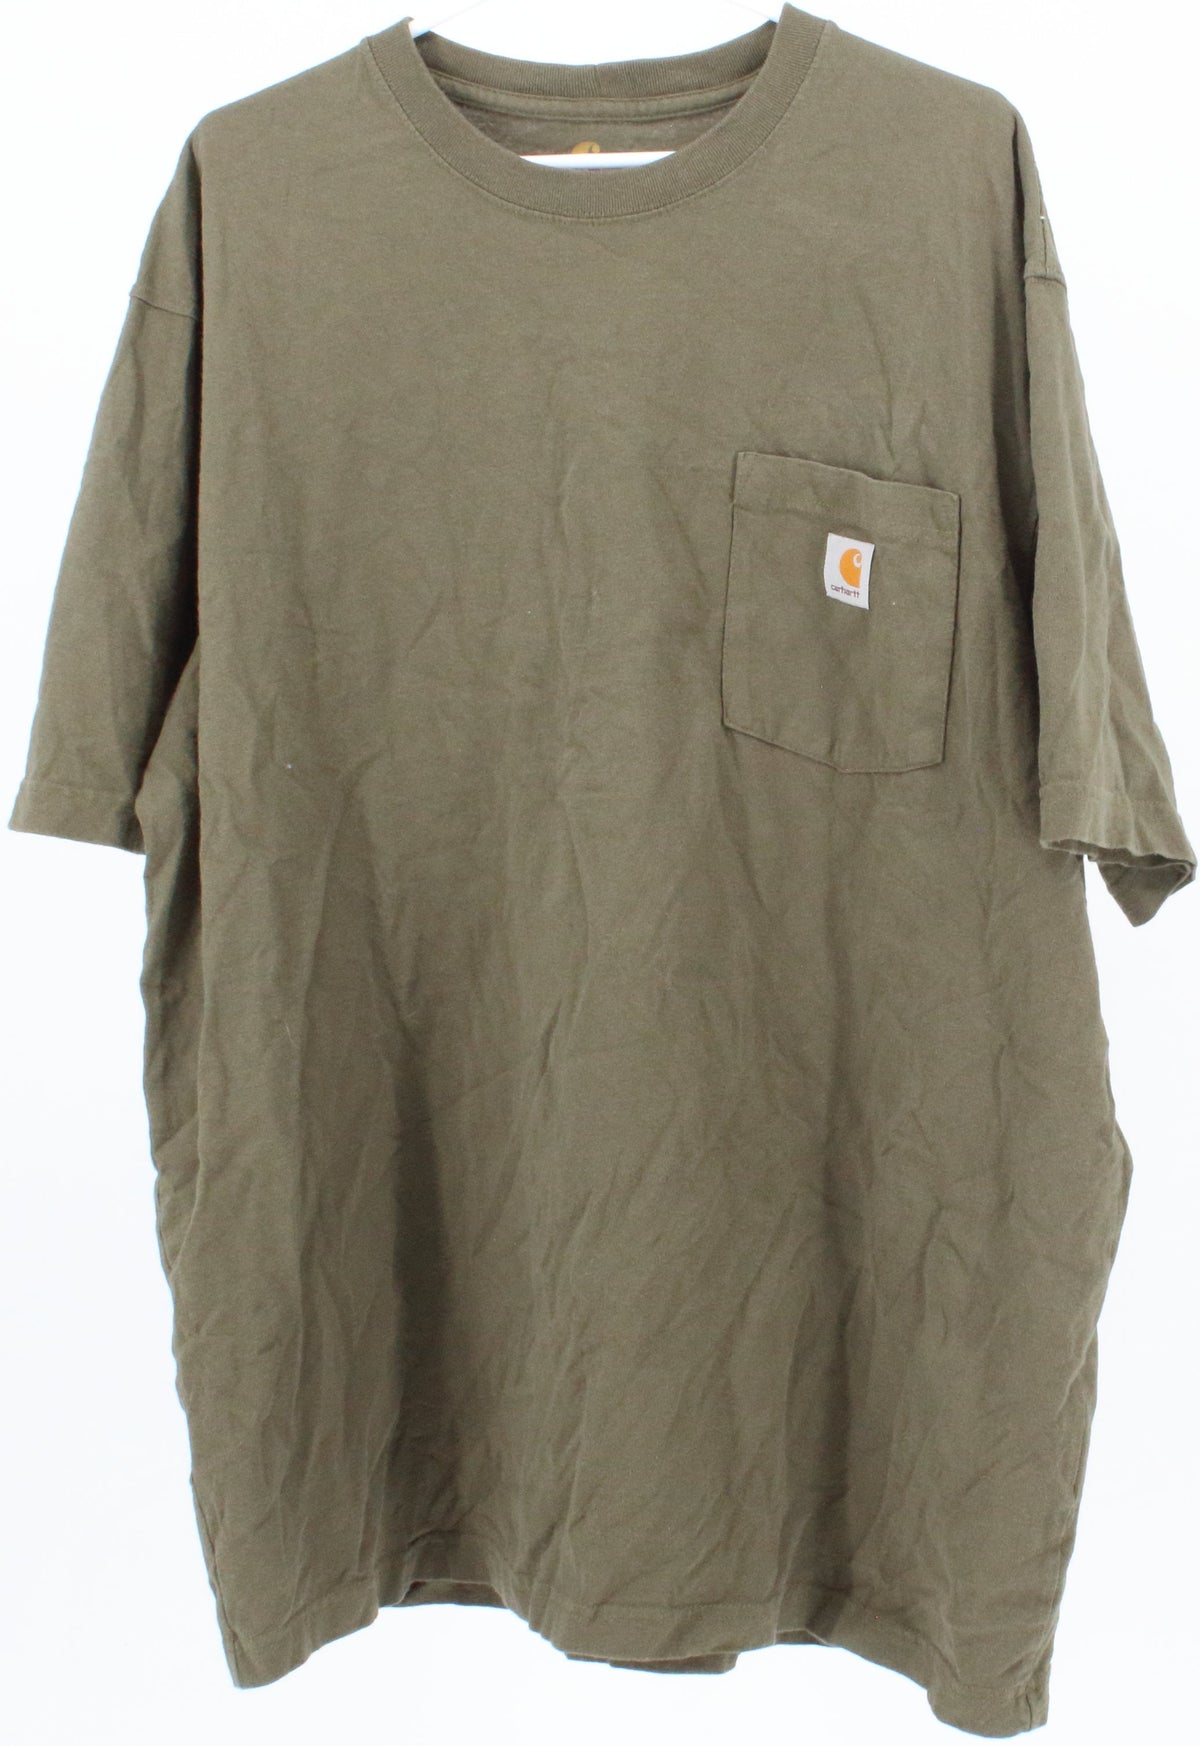 Carhartt Original Fit Pocket Military Green T-Shirt